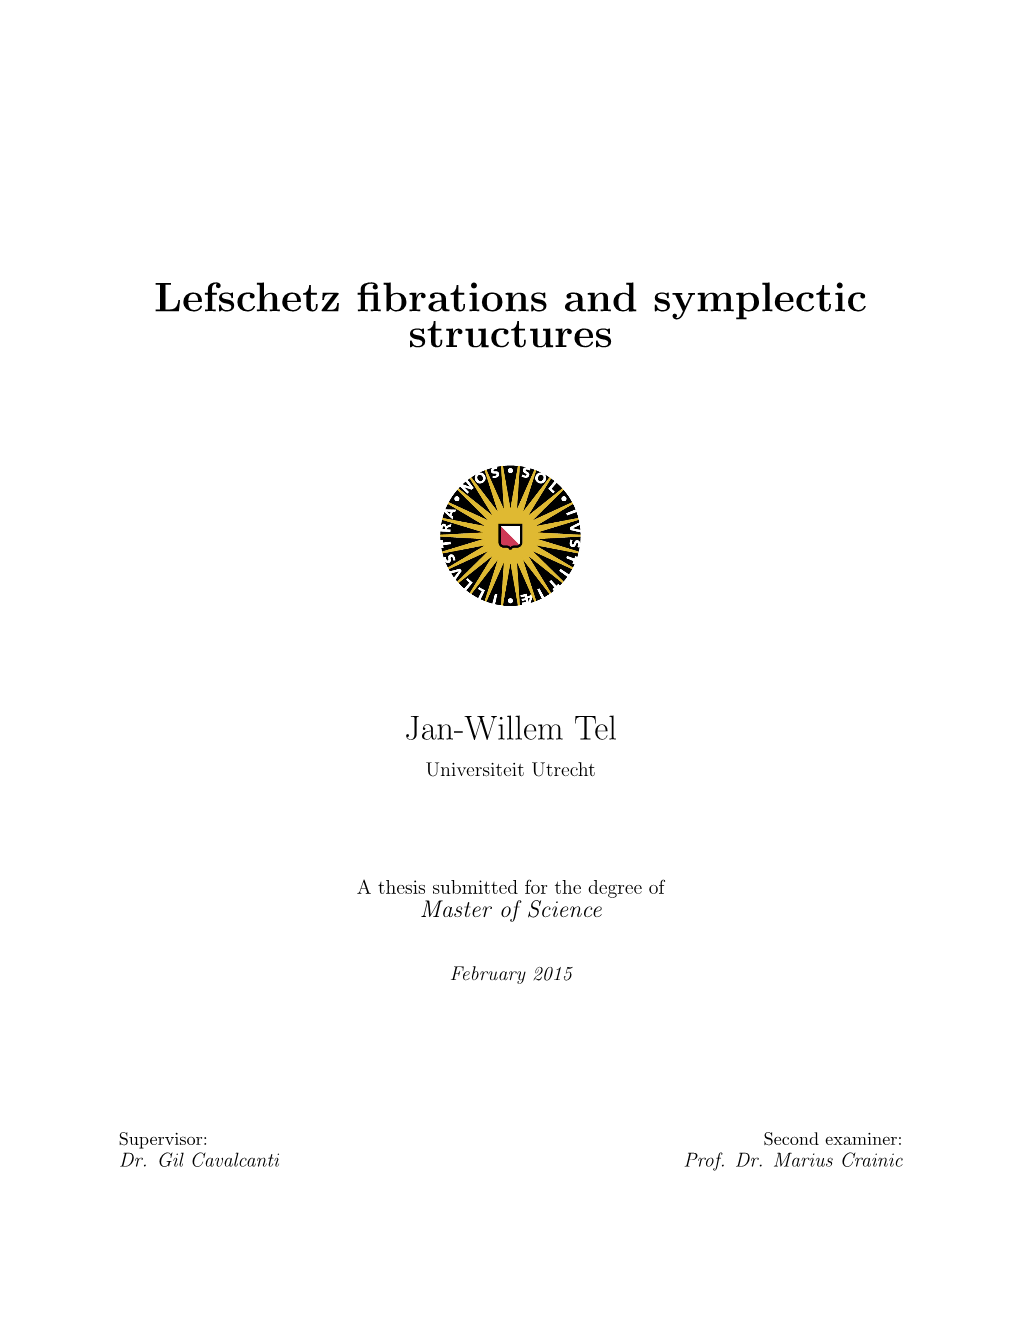 Lefschetz Fibrations and Symplectic Structures 17